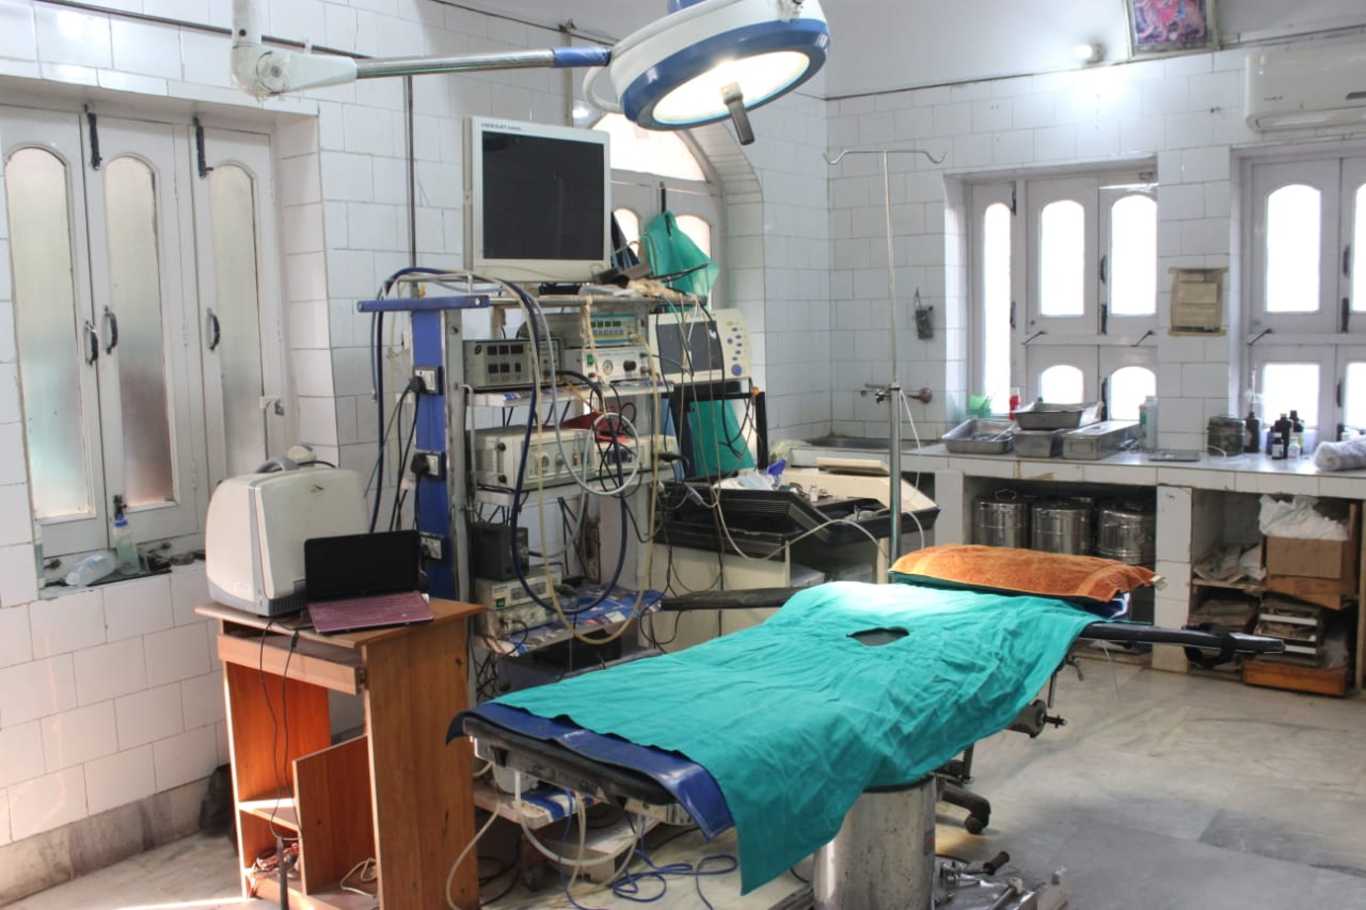 Mishra Hospital And Test Tube Baby Centre || IVF Center - IVF Centre in Muzaffarpur